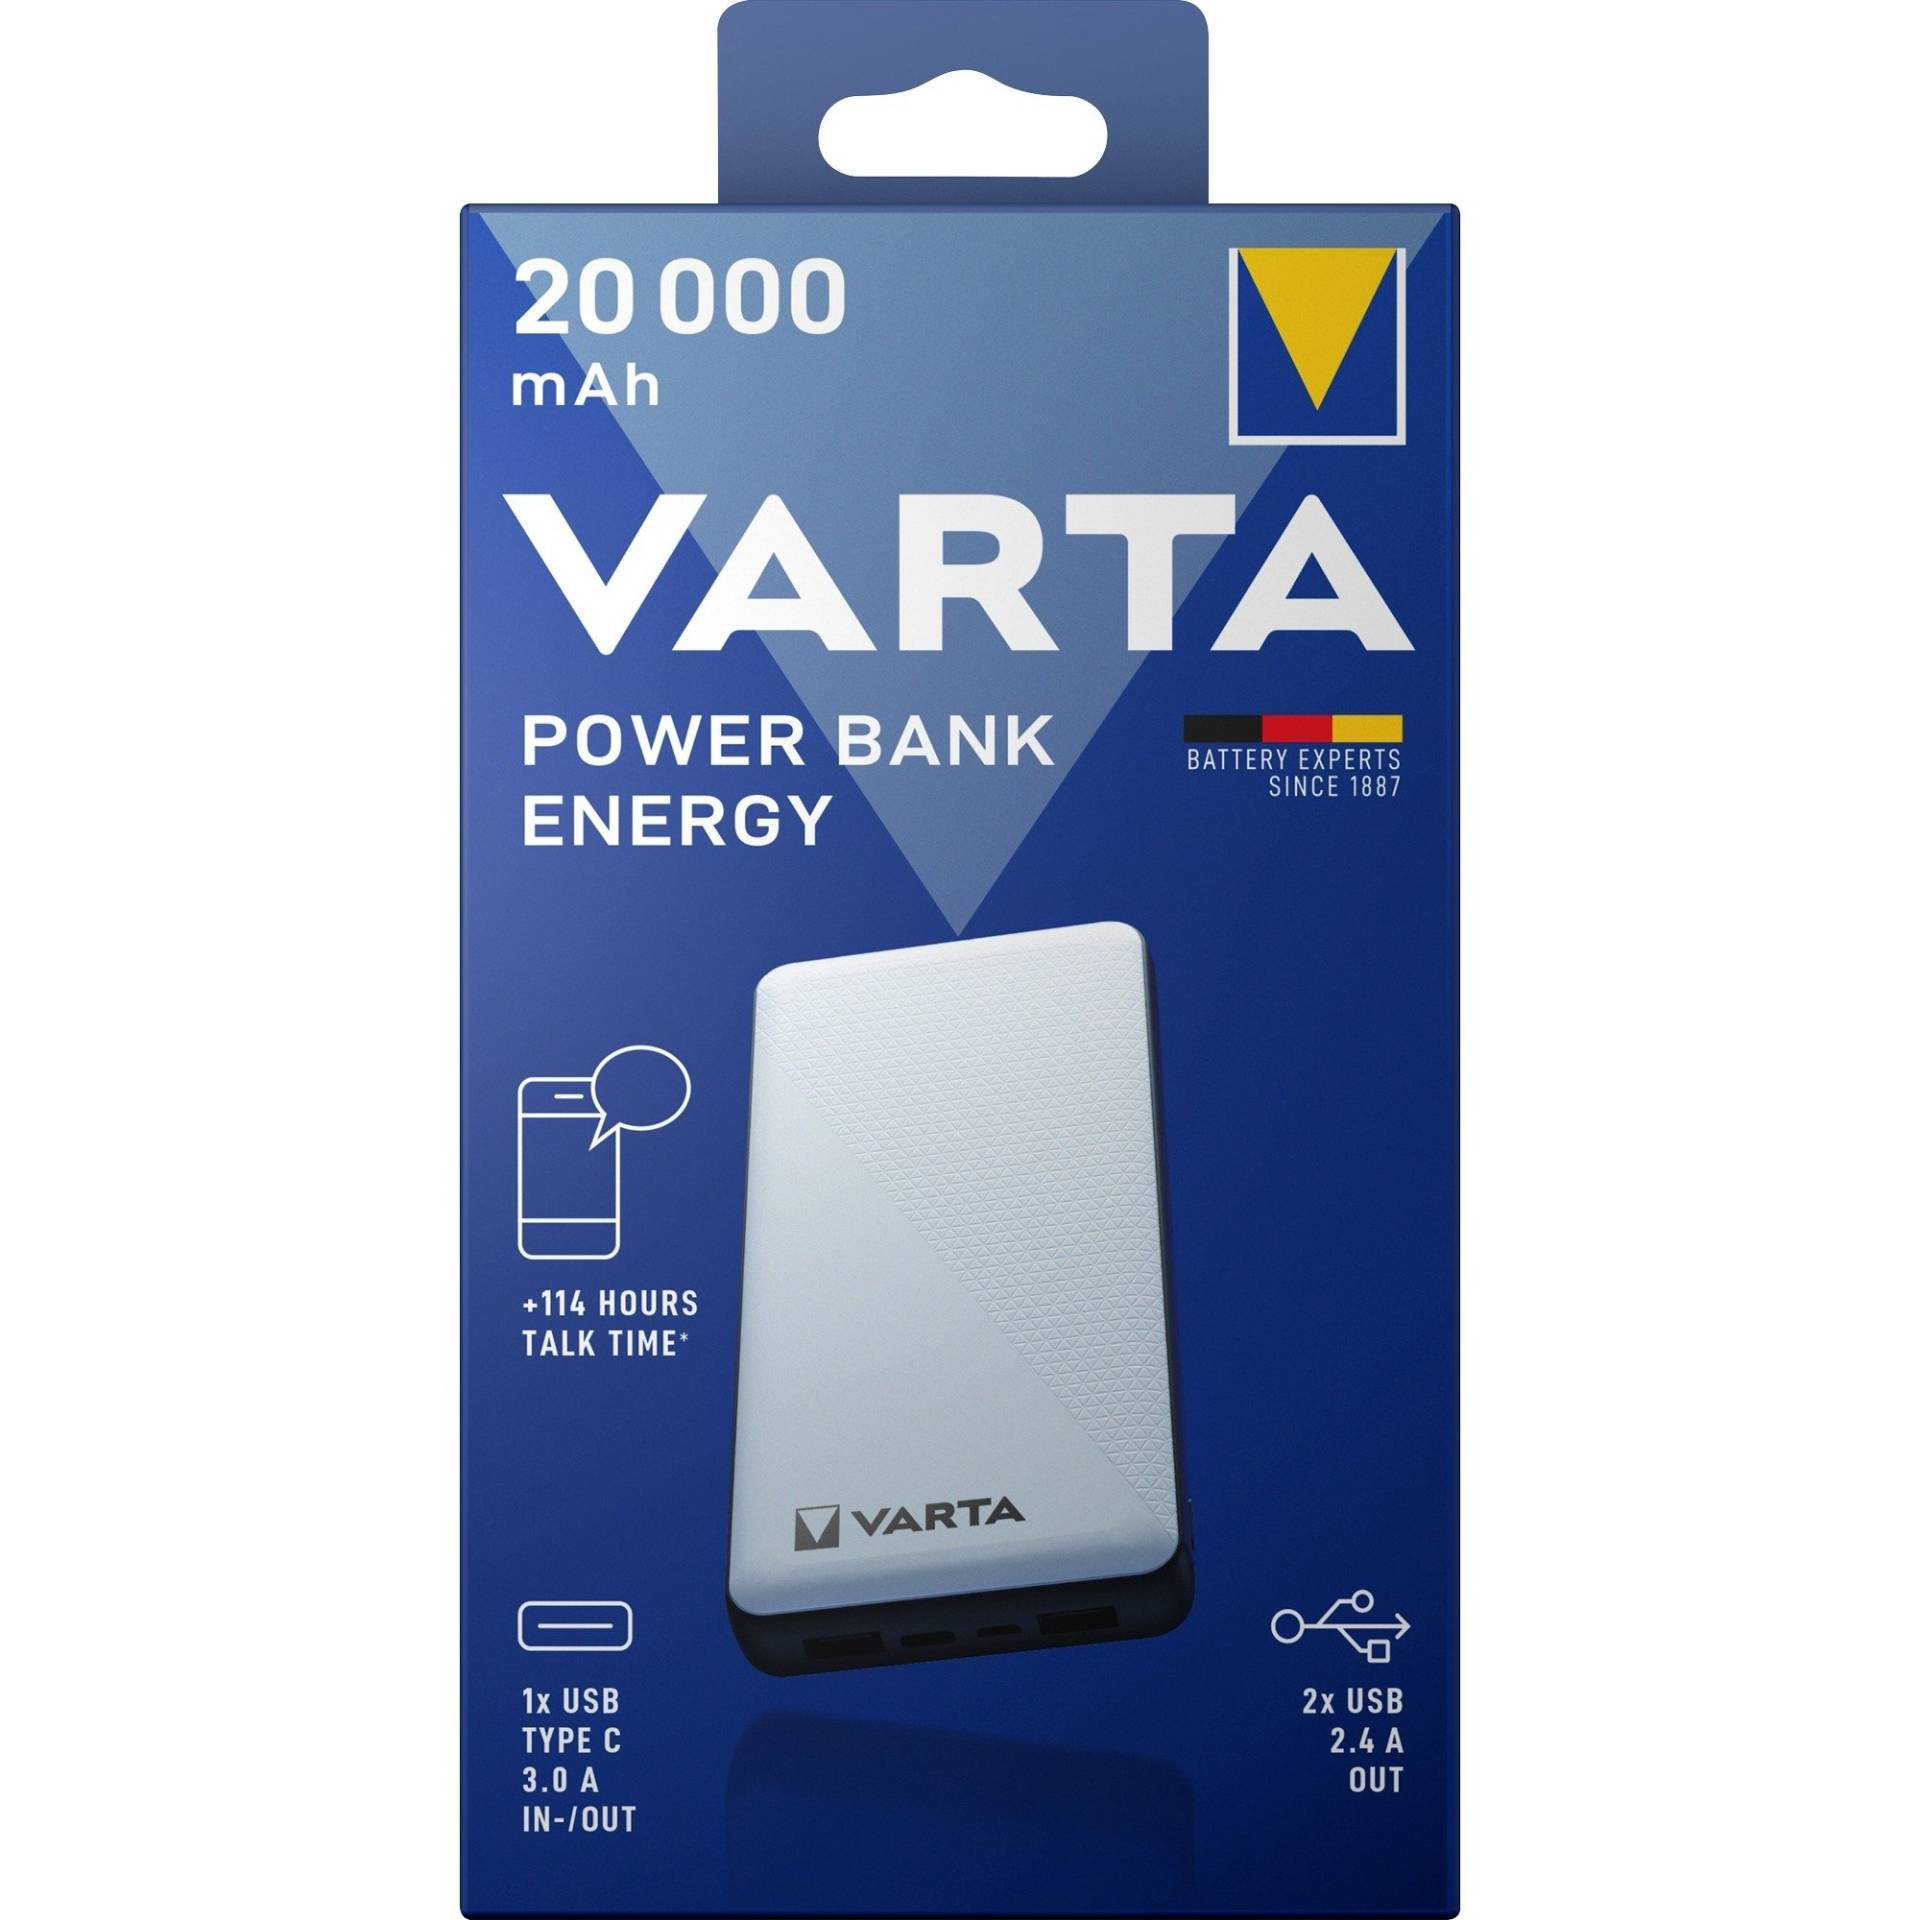 Powerbank Energy 20000 von Varta